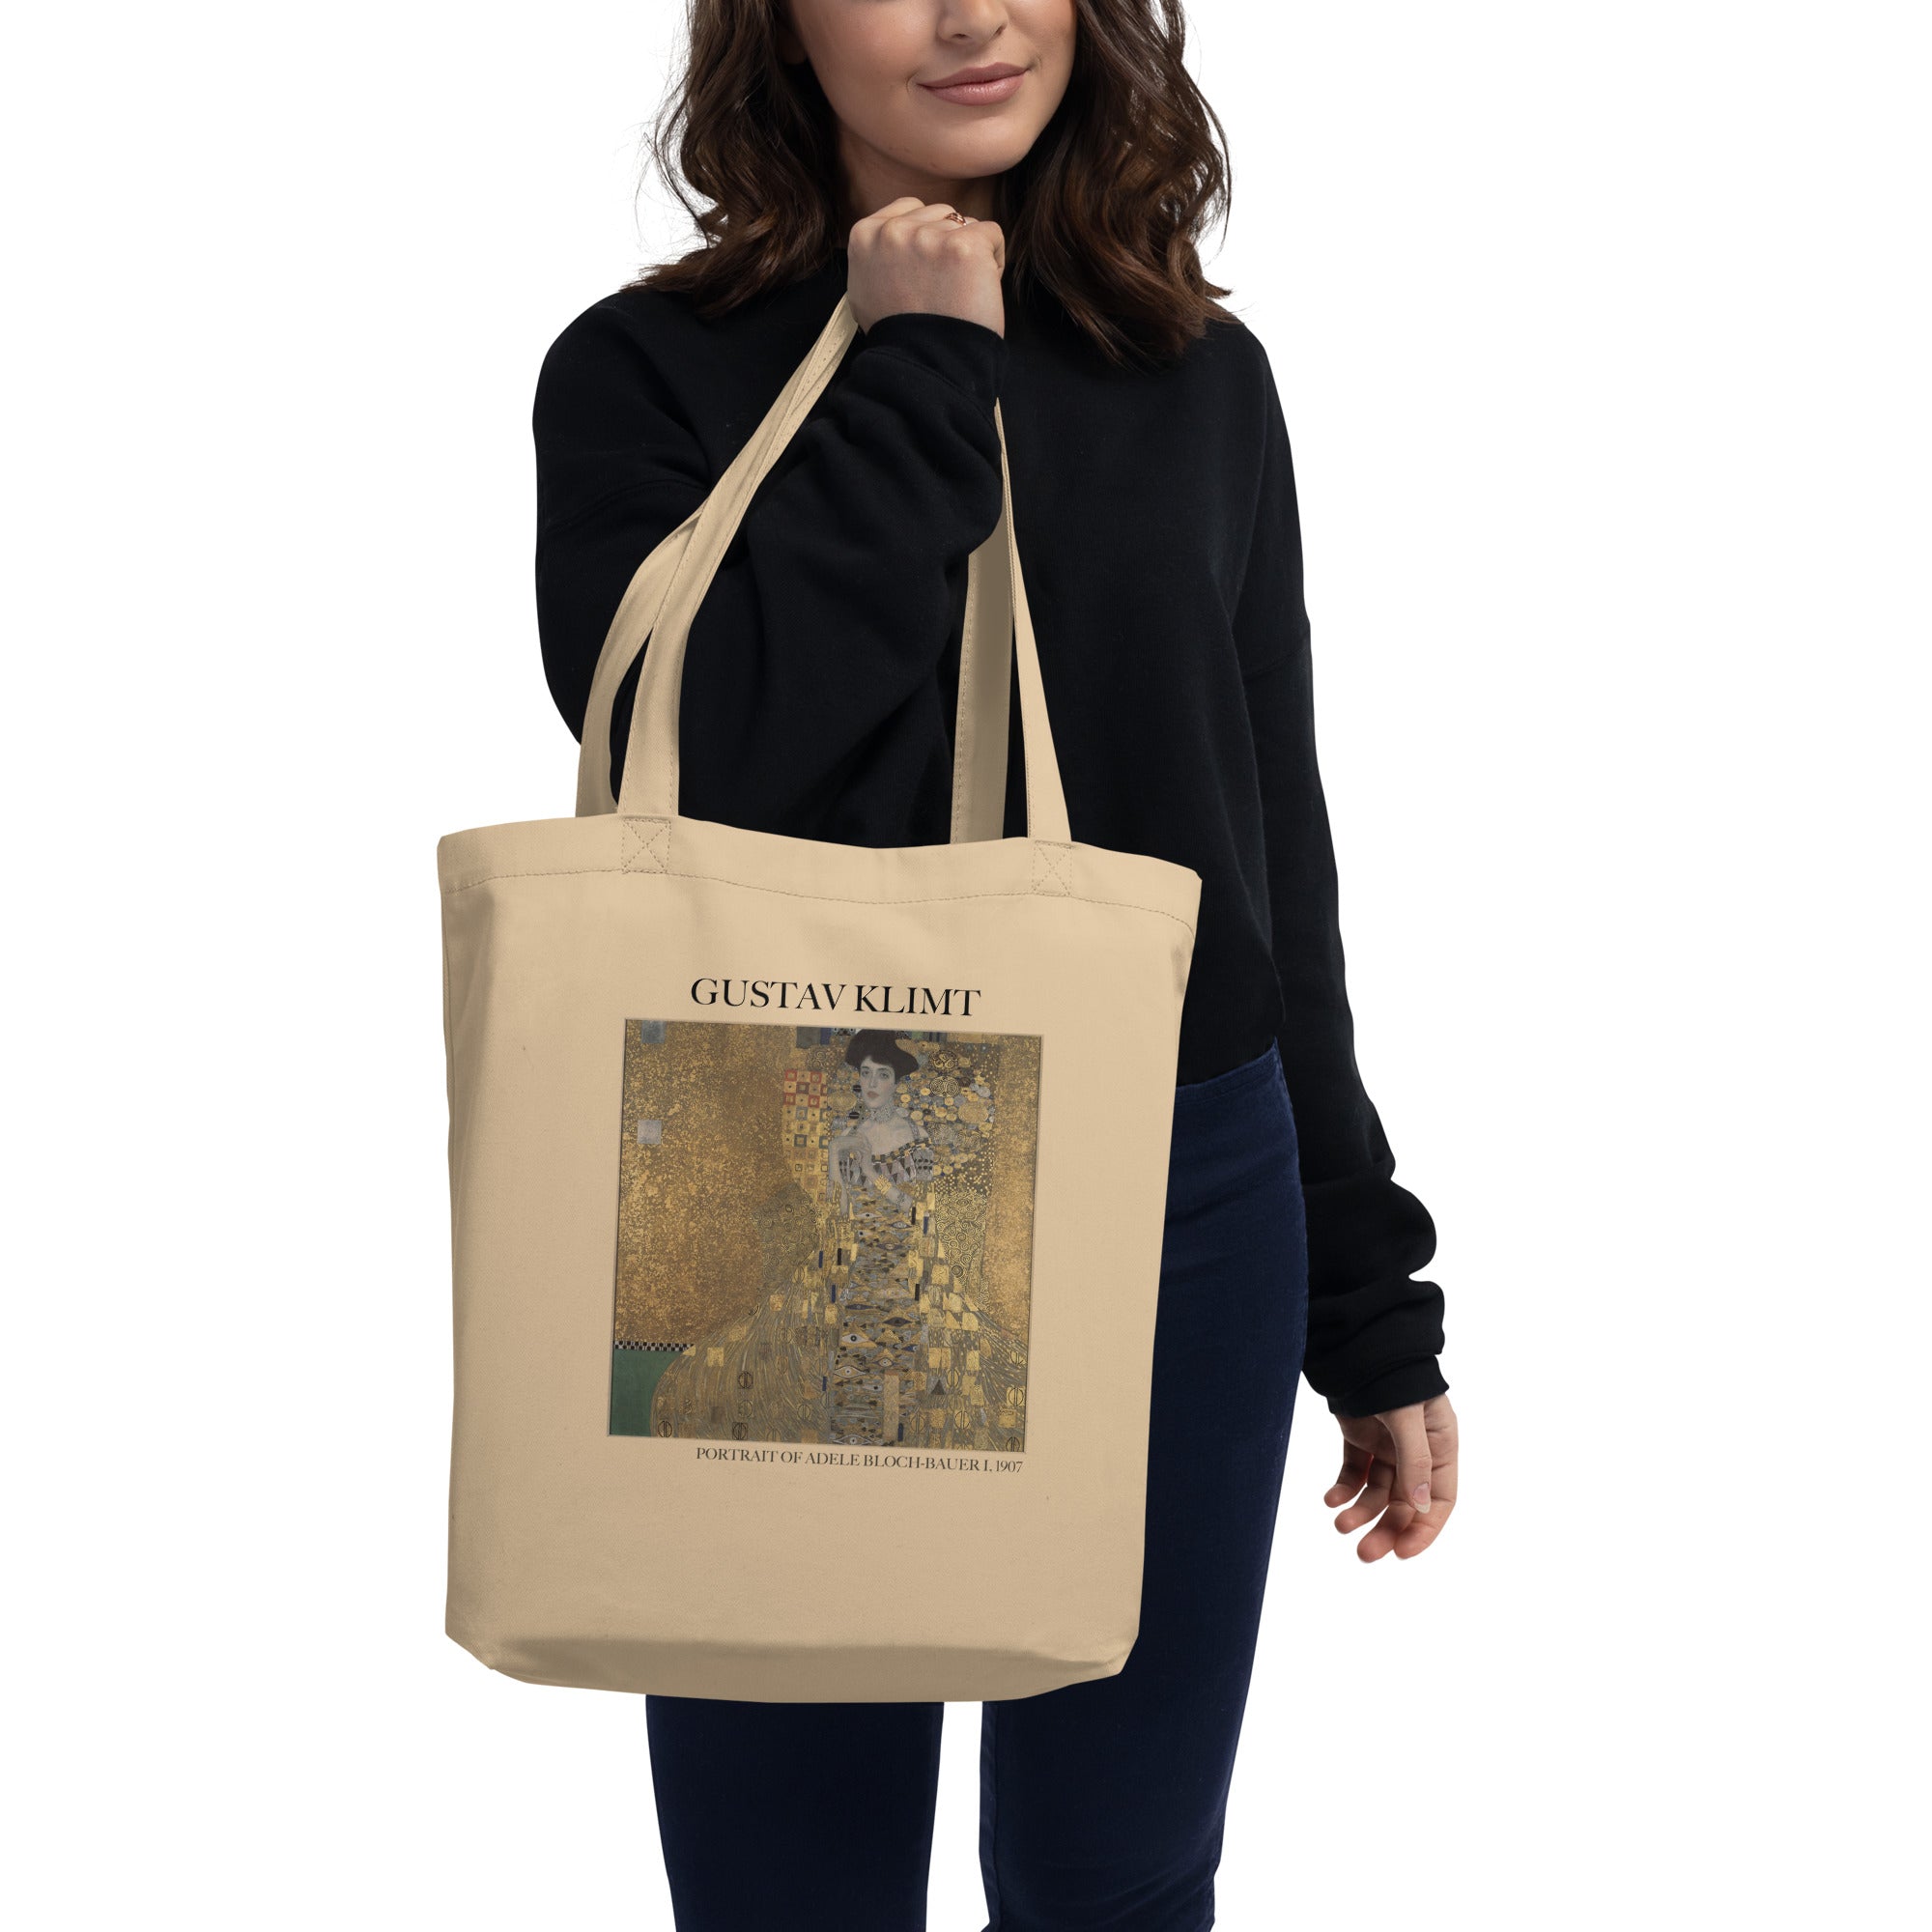 Gustav Klimt 'Portrait of Adele Bloch-Bauer I' Famous Painting Totebag | Eco Friendly Art Tote Bag